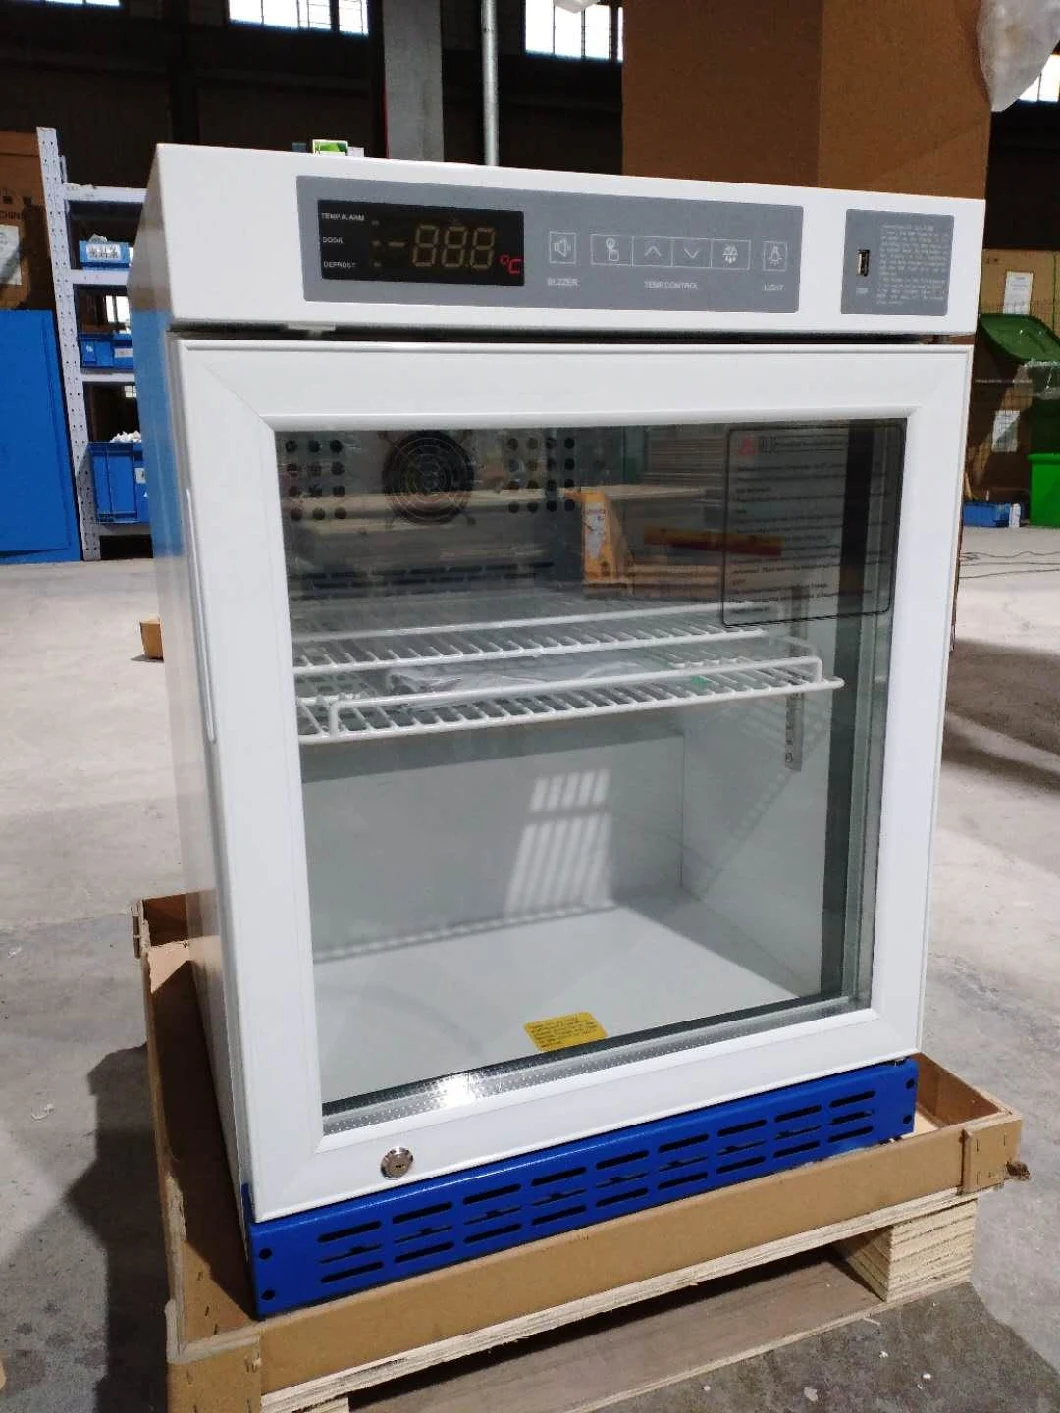 China Lab Medical Upright Ultra Low Temperature Freezer -86 Cryogenic Freezer Price